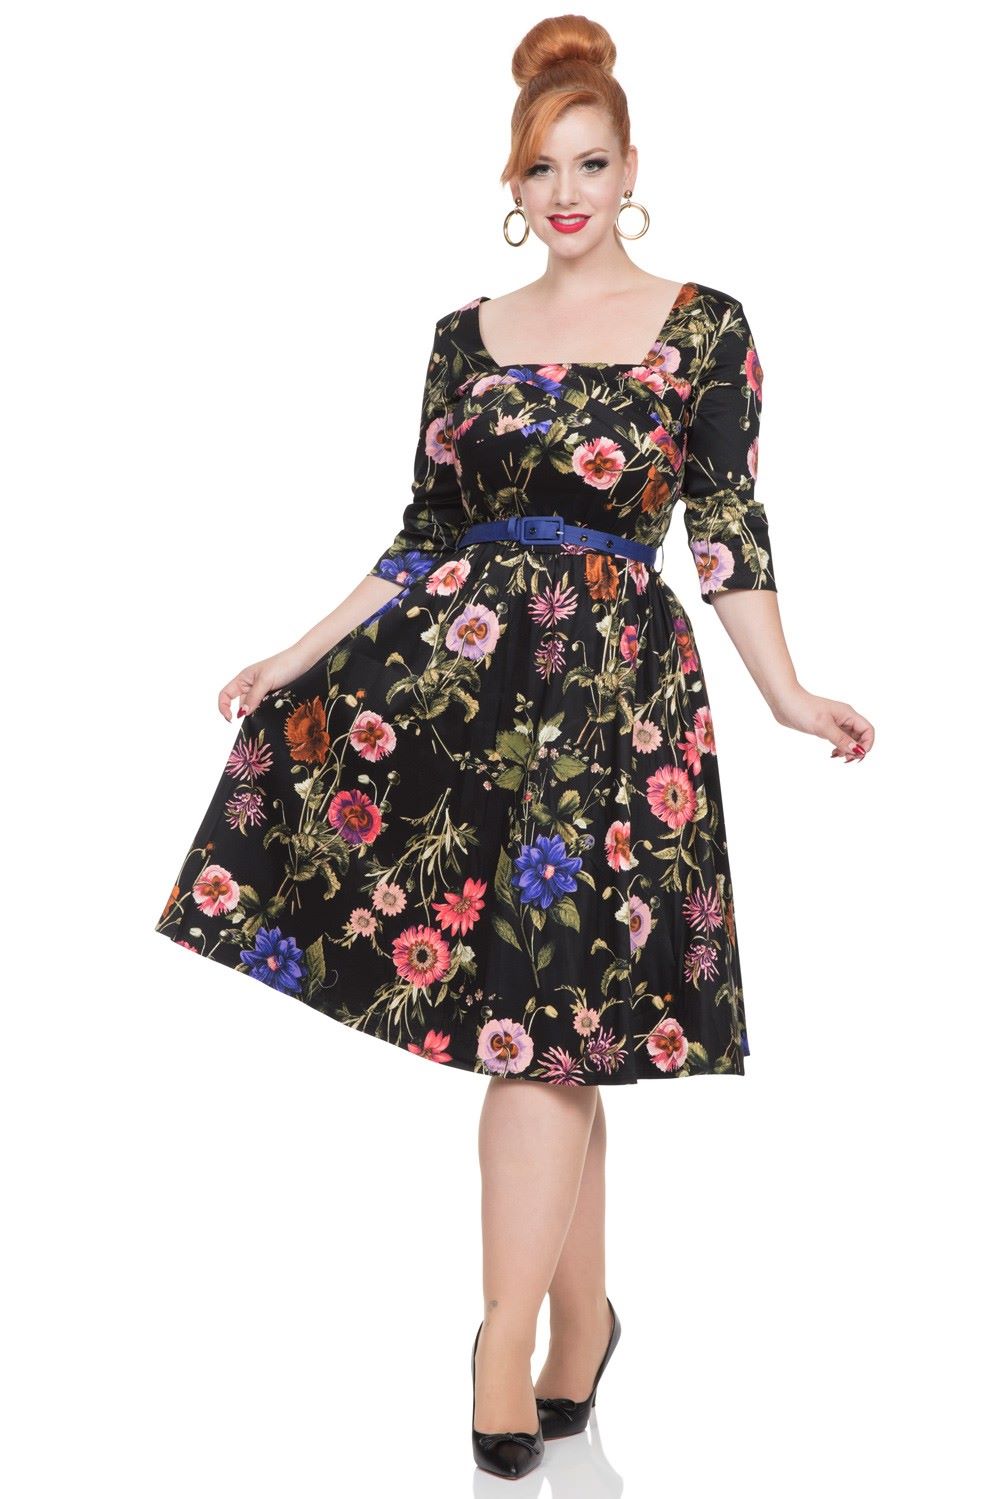 Dresses - Retro Daisy Online Shop